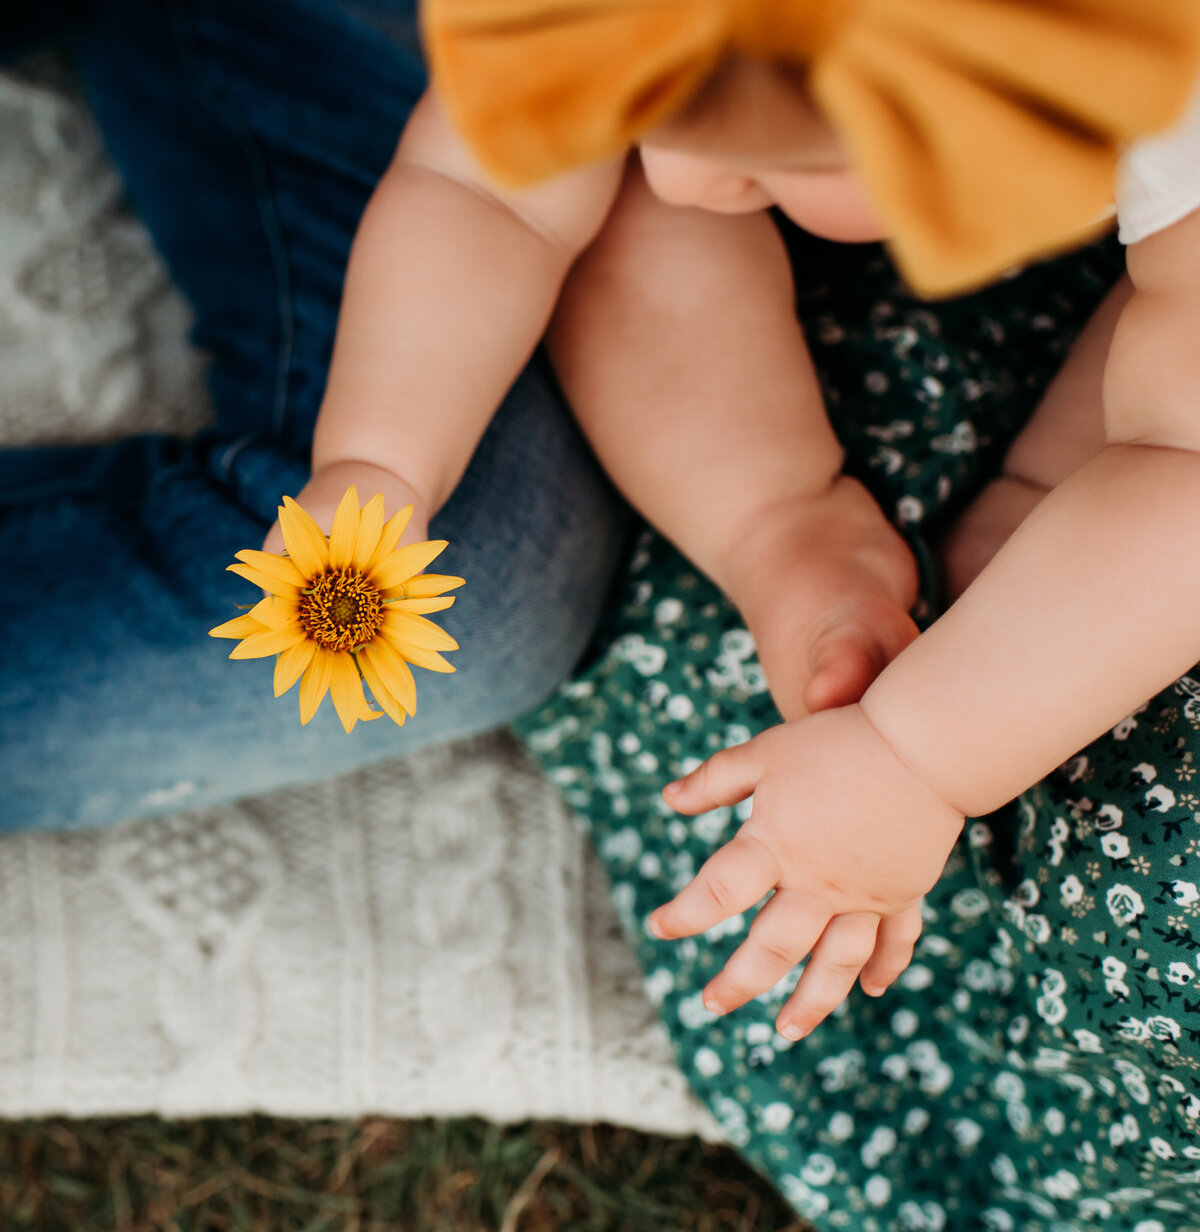 Baby girl holding a sunflower.